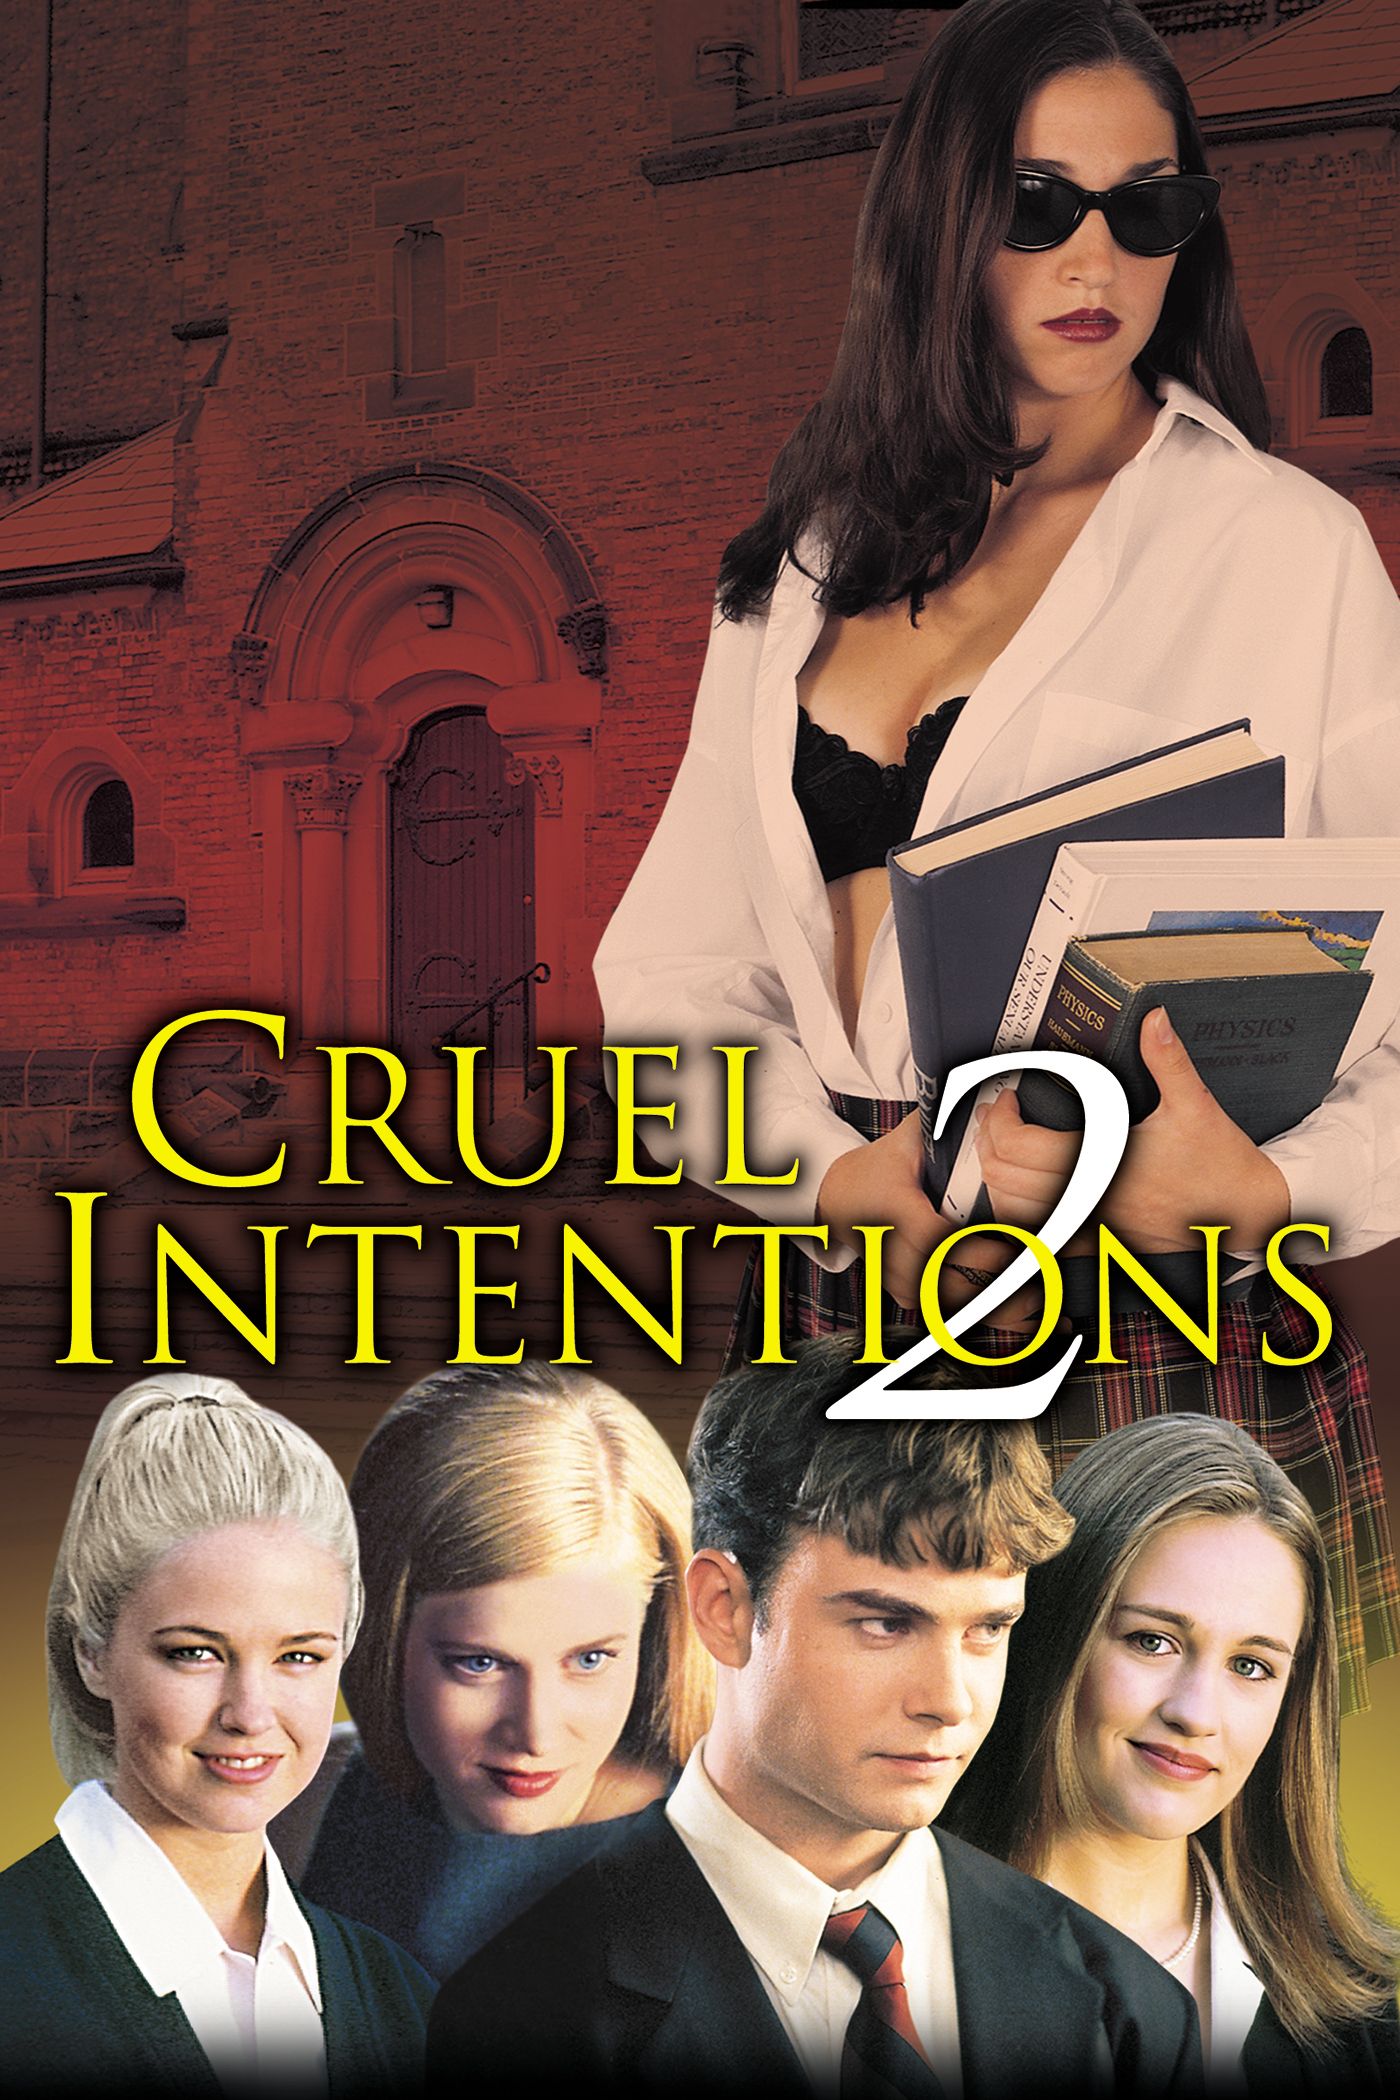 Cruel intentions 2